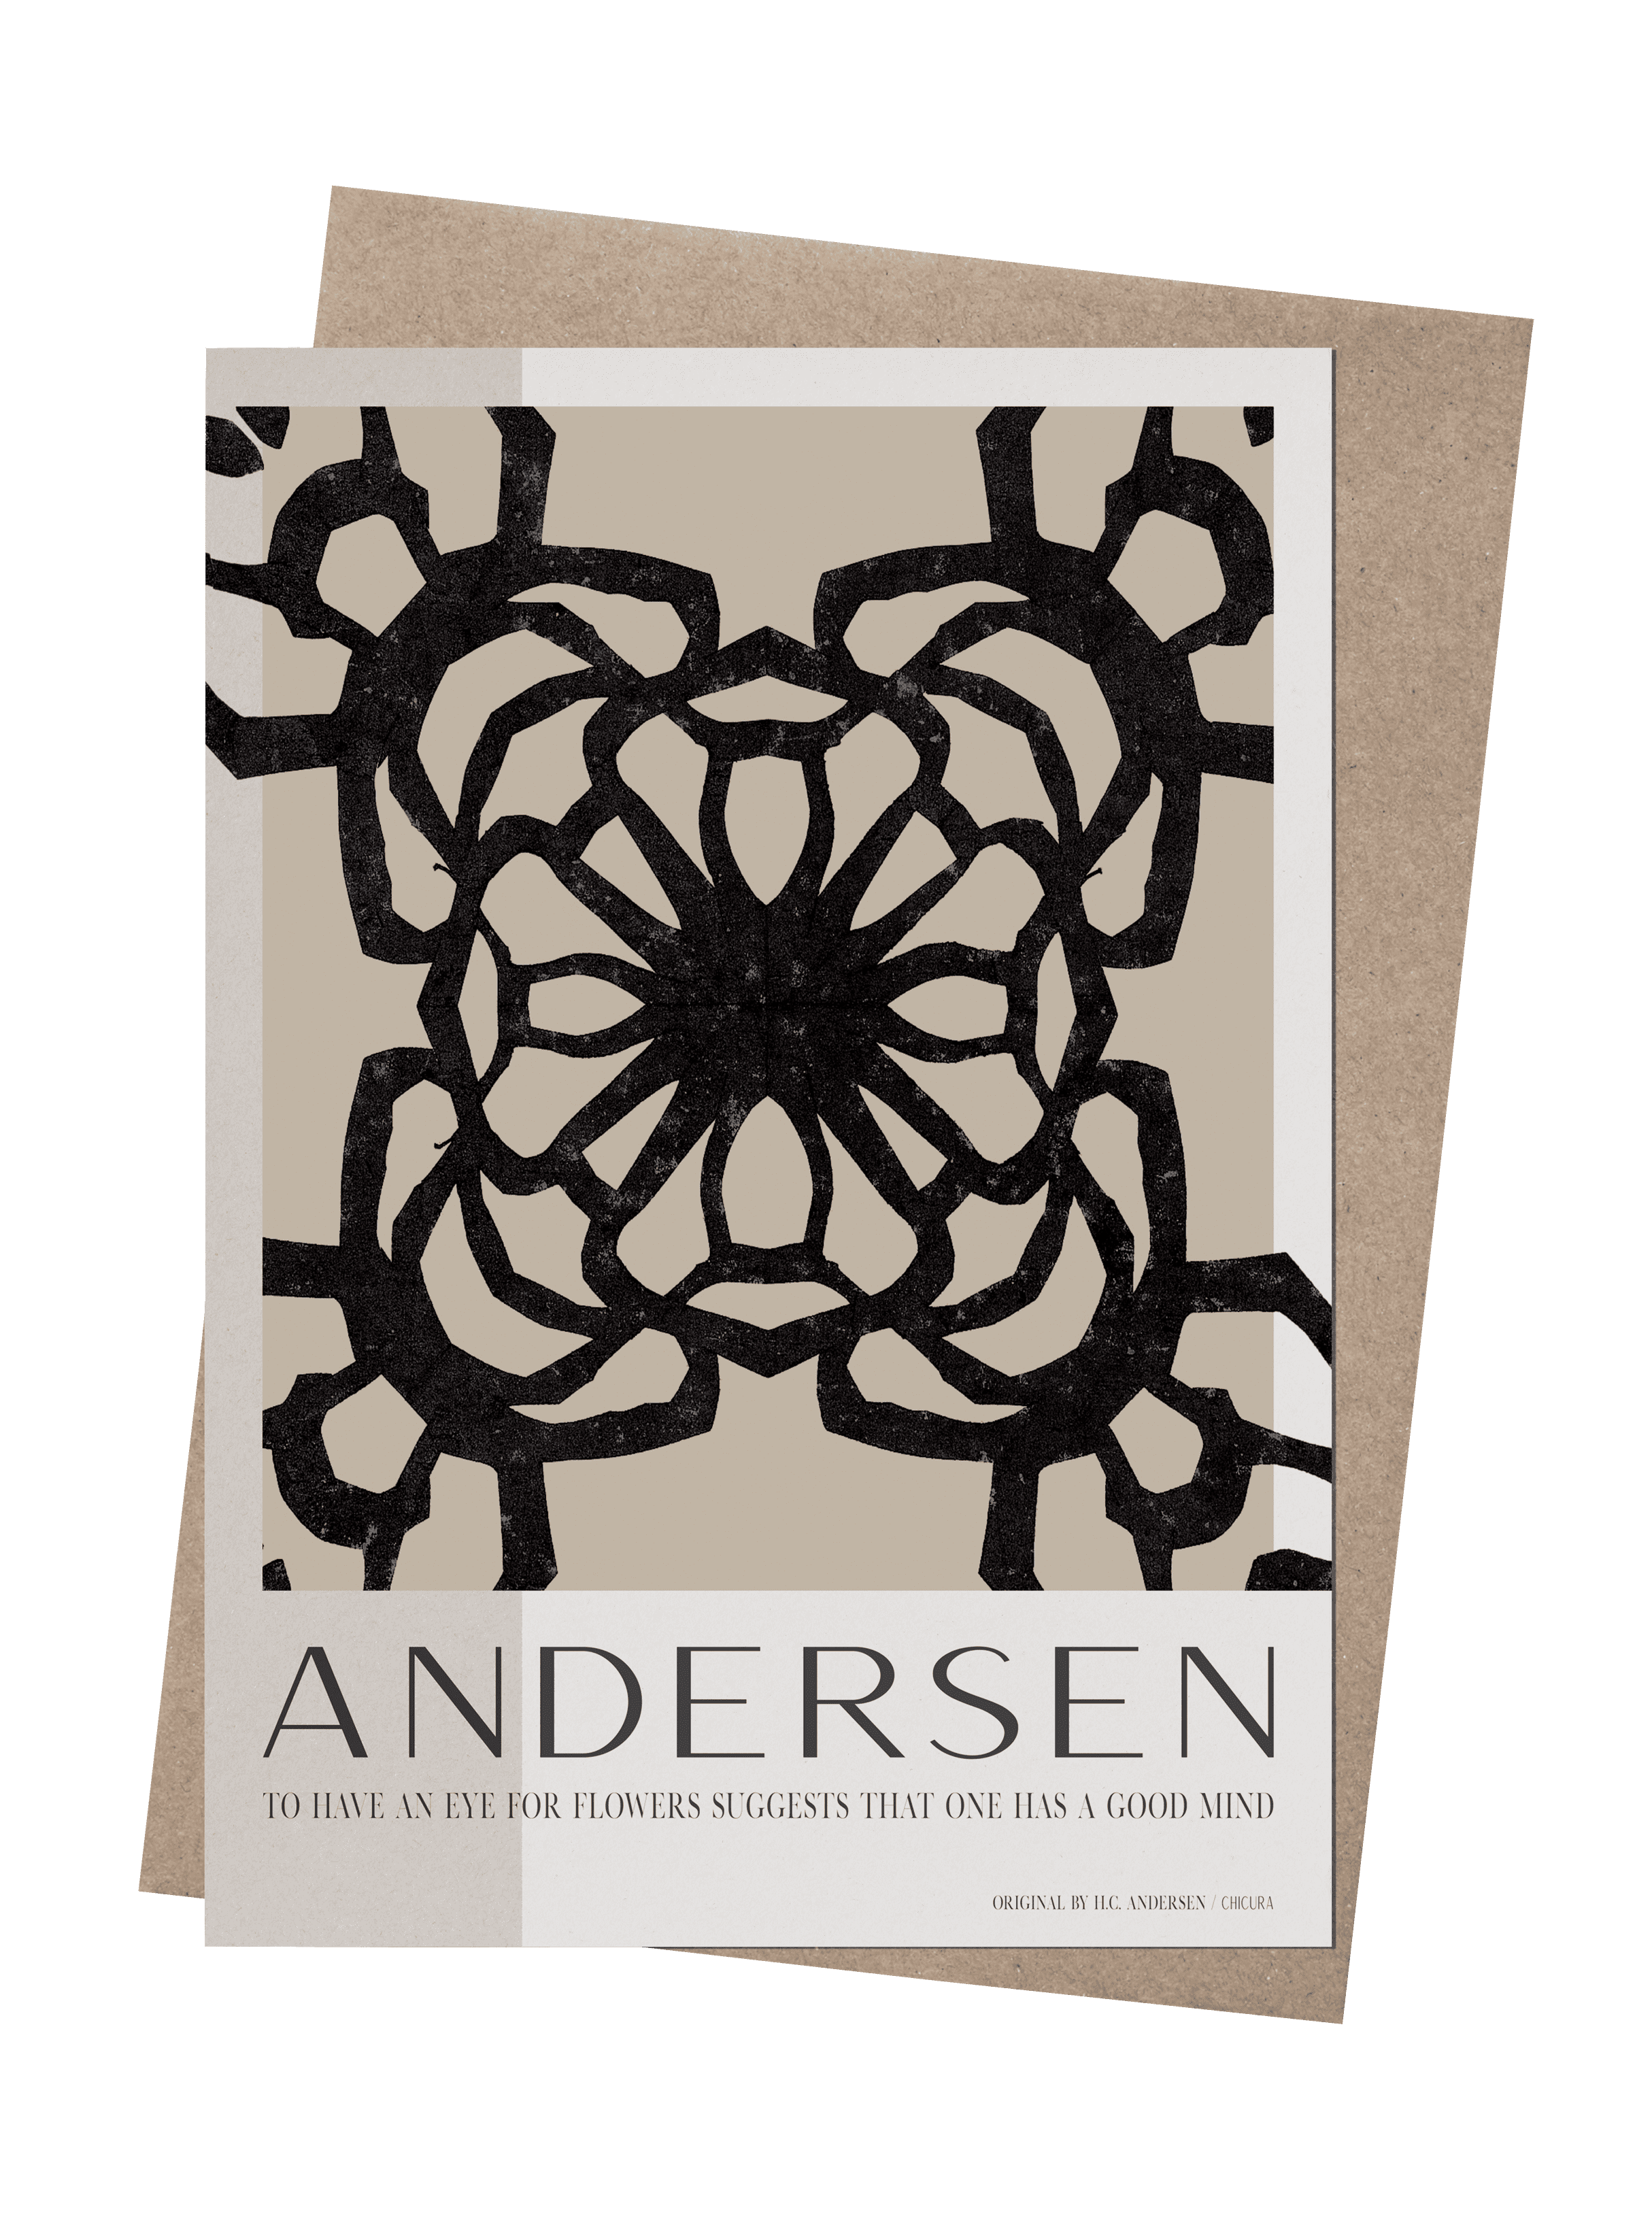 H.C. Andersen - Flower Mind - ChiCura Copenhagen DK -